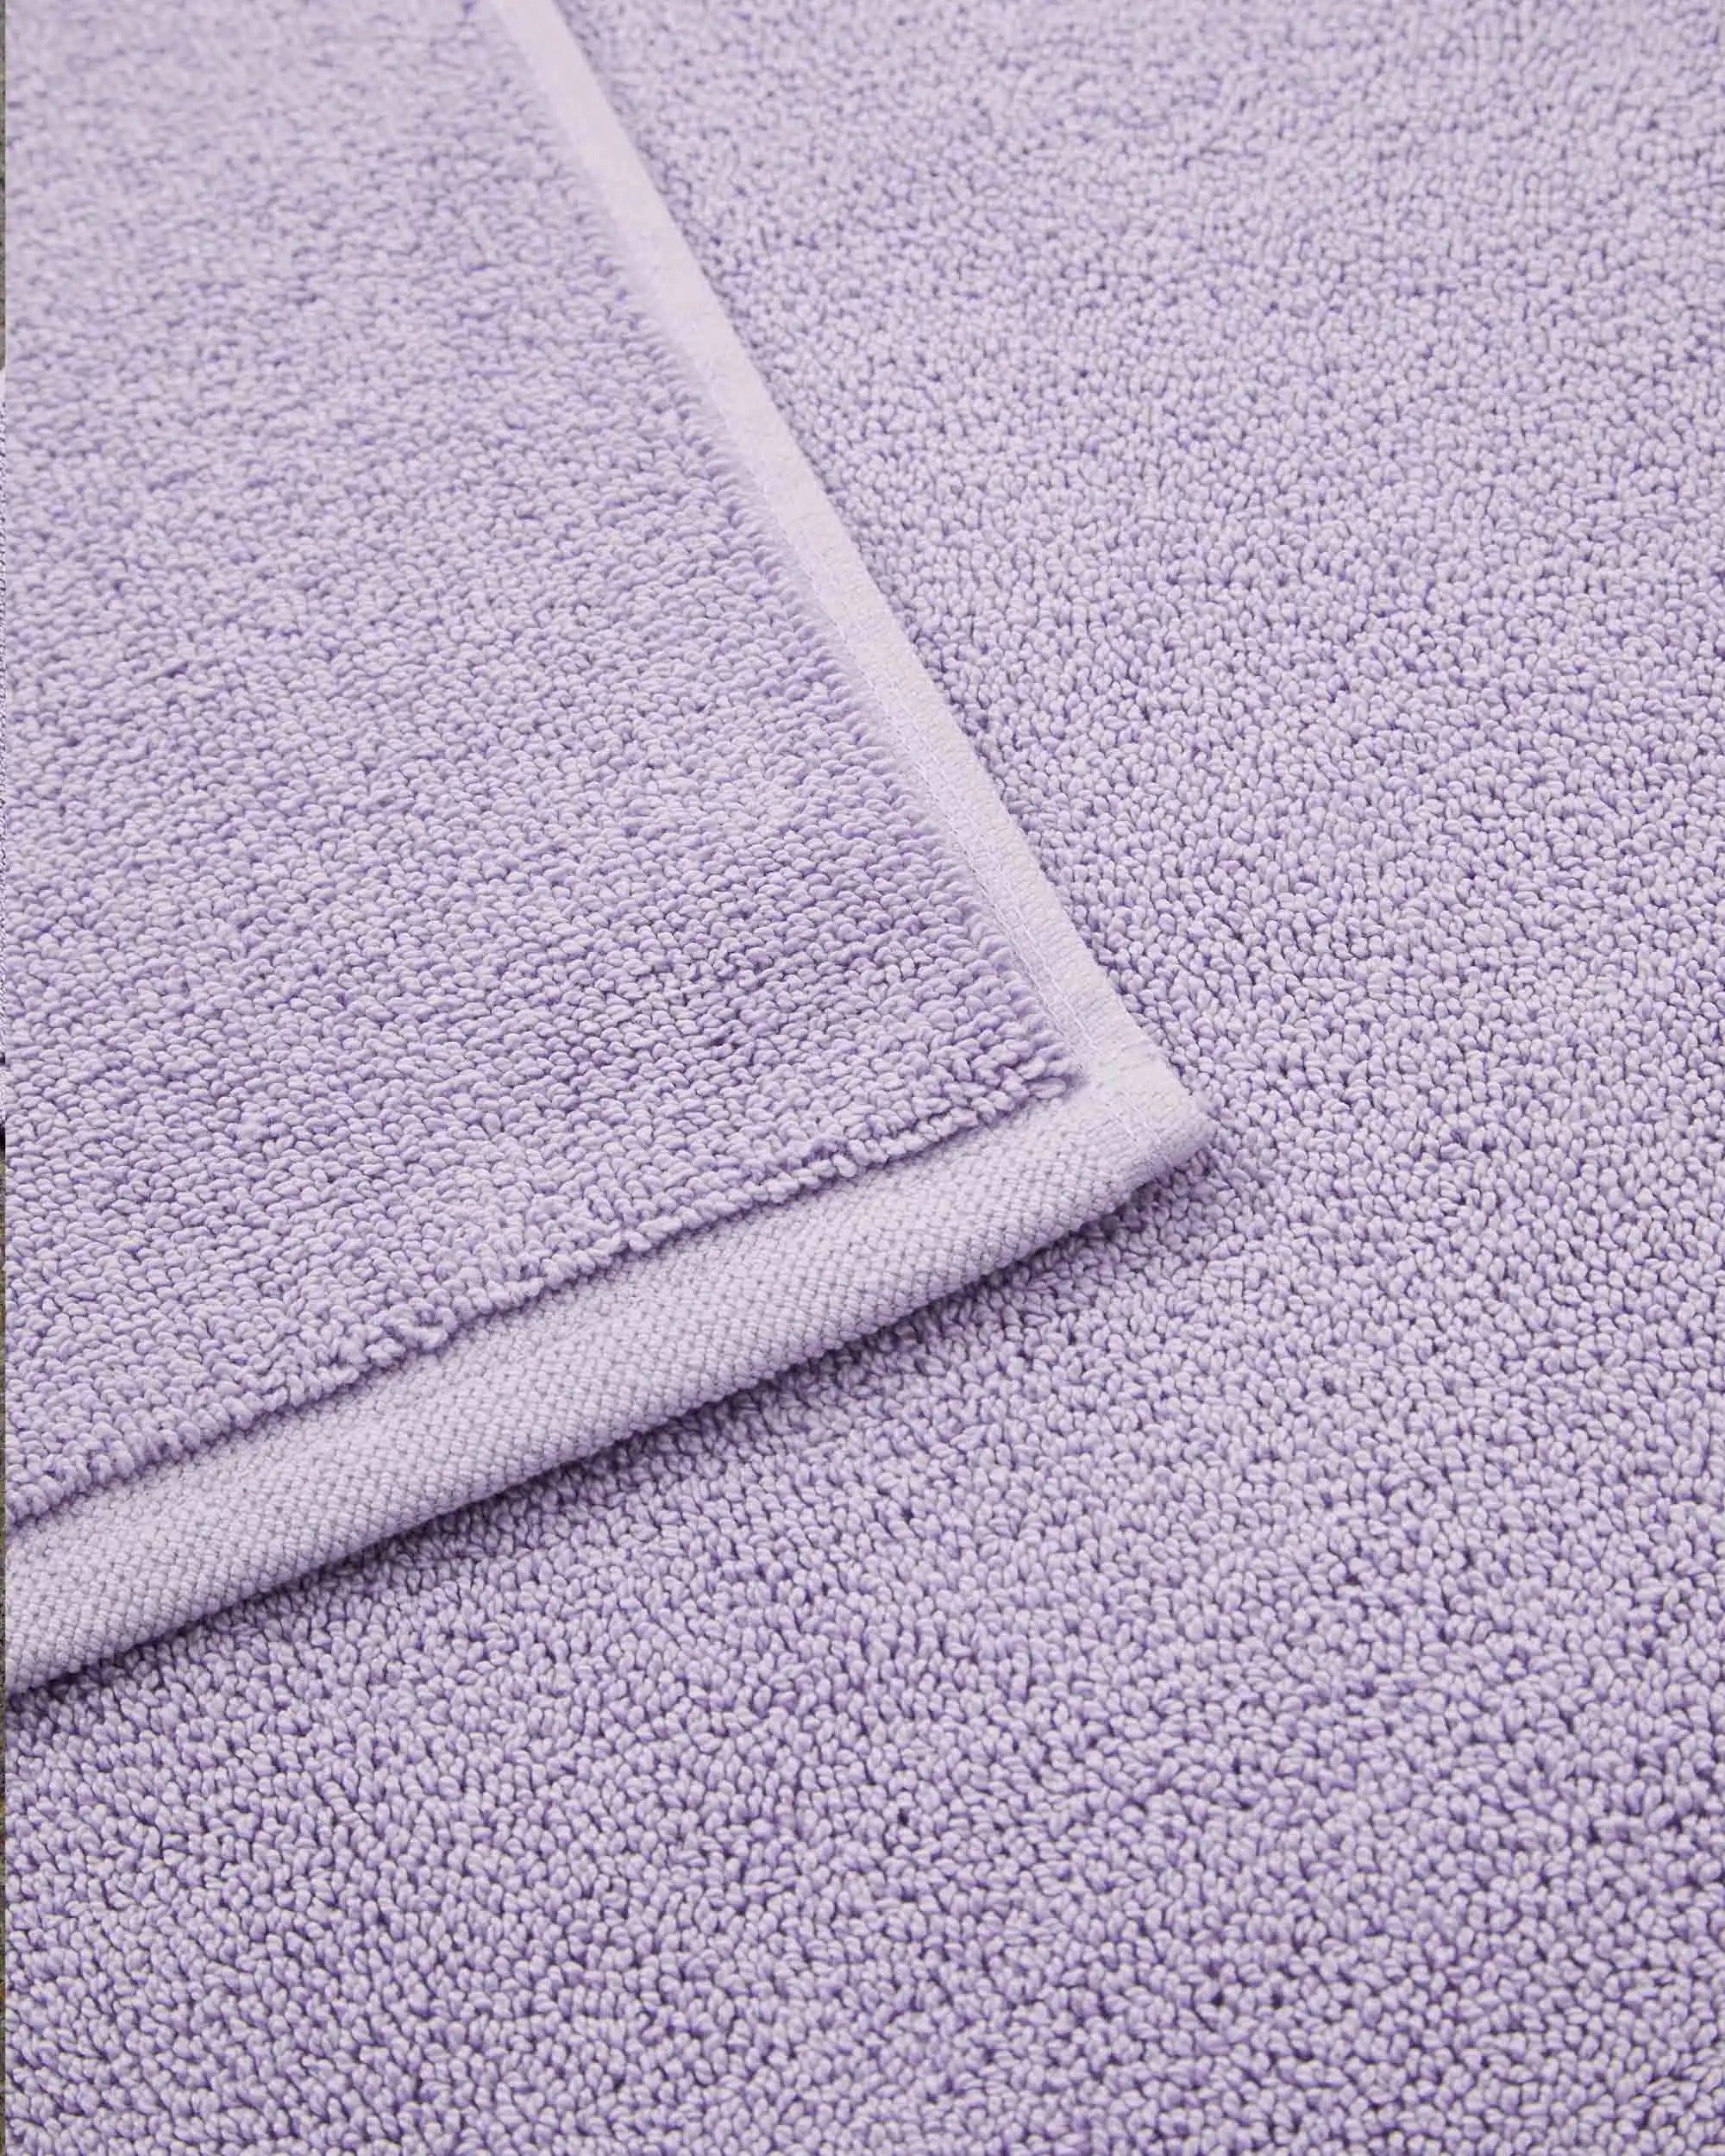 Bathmat - Lavender